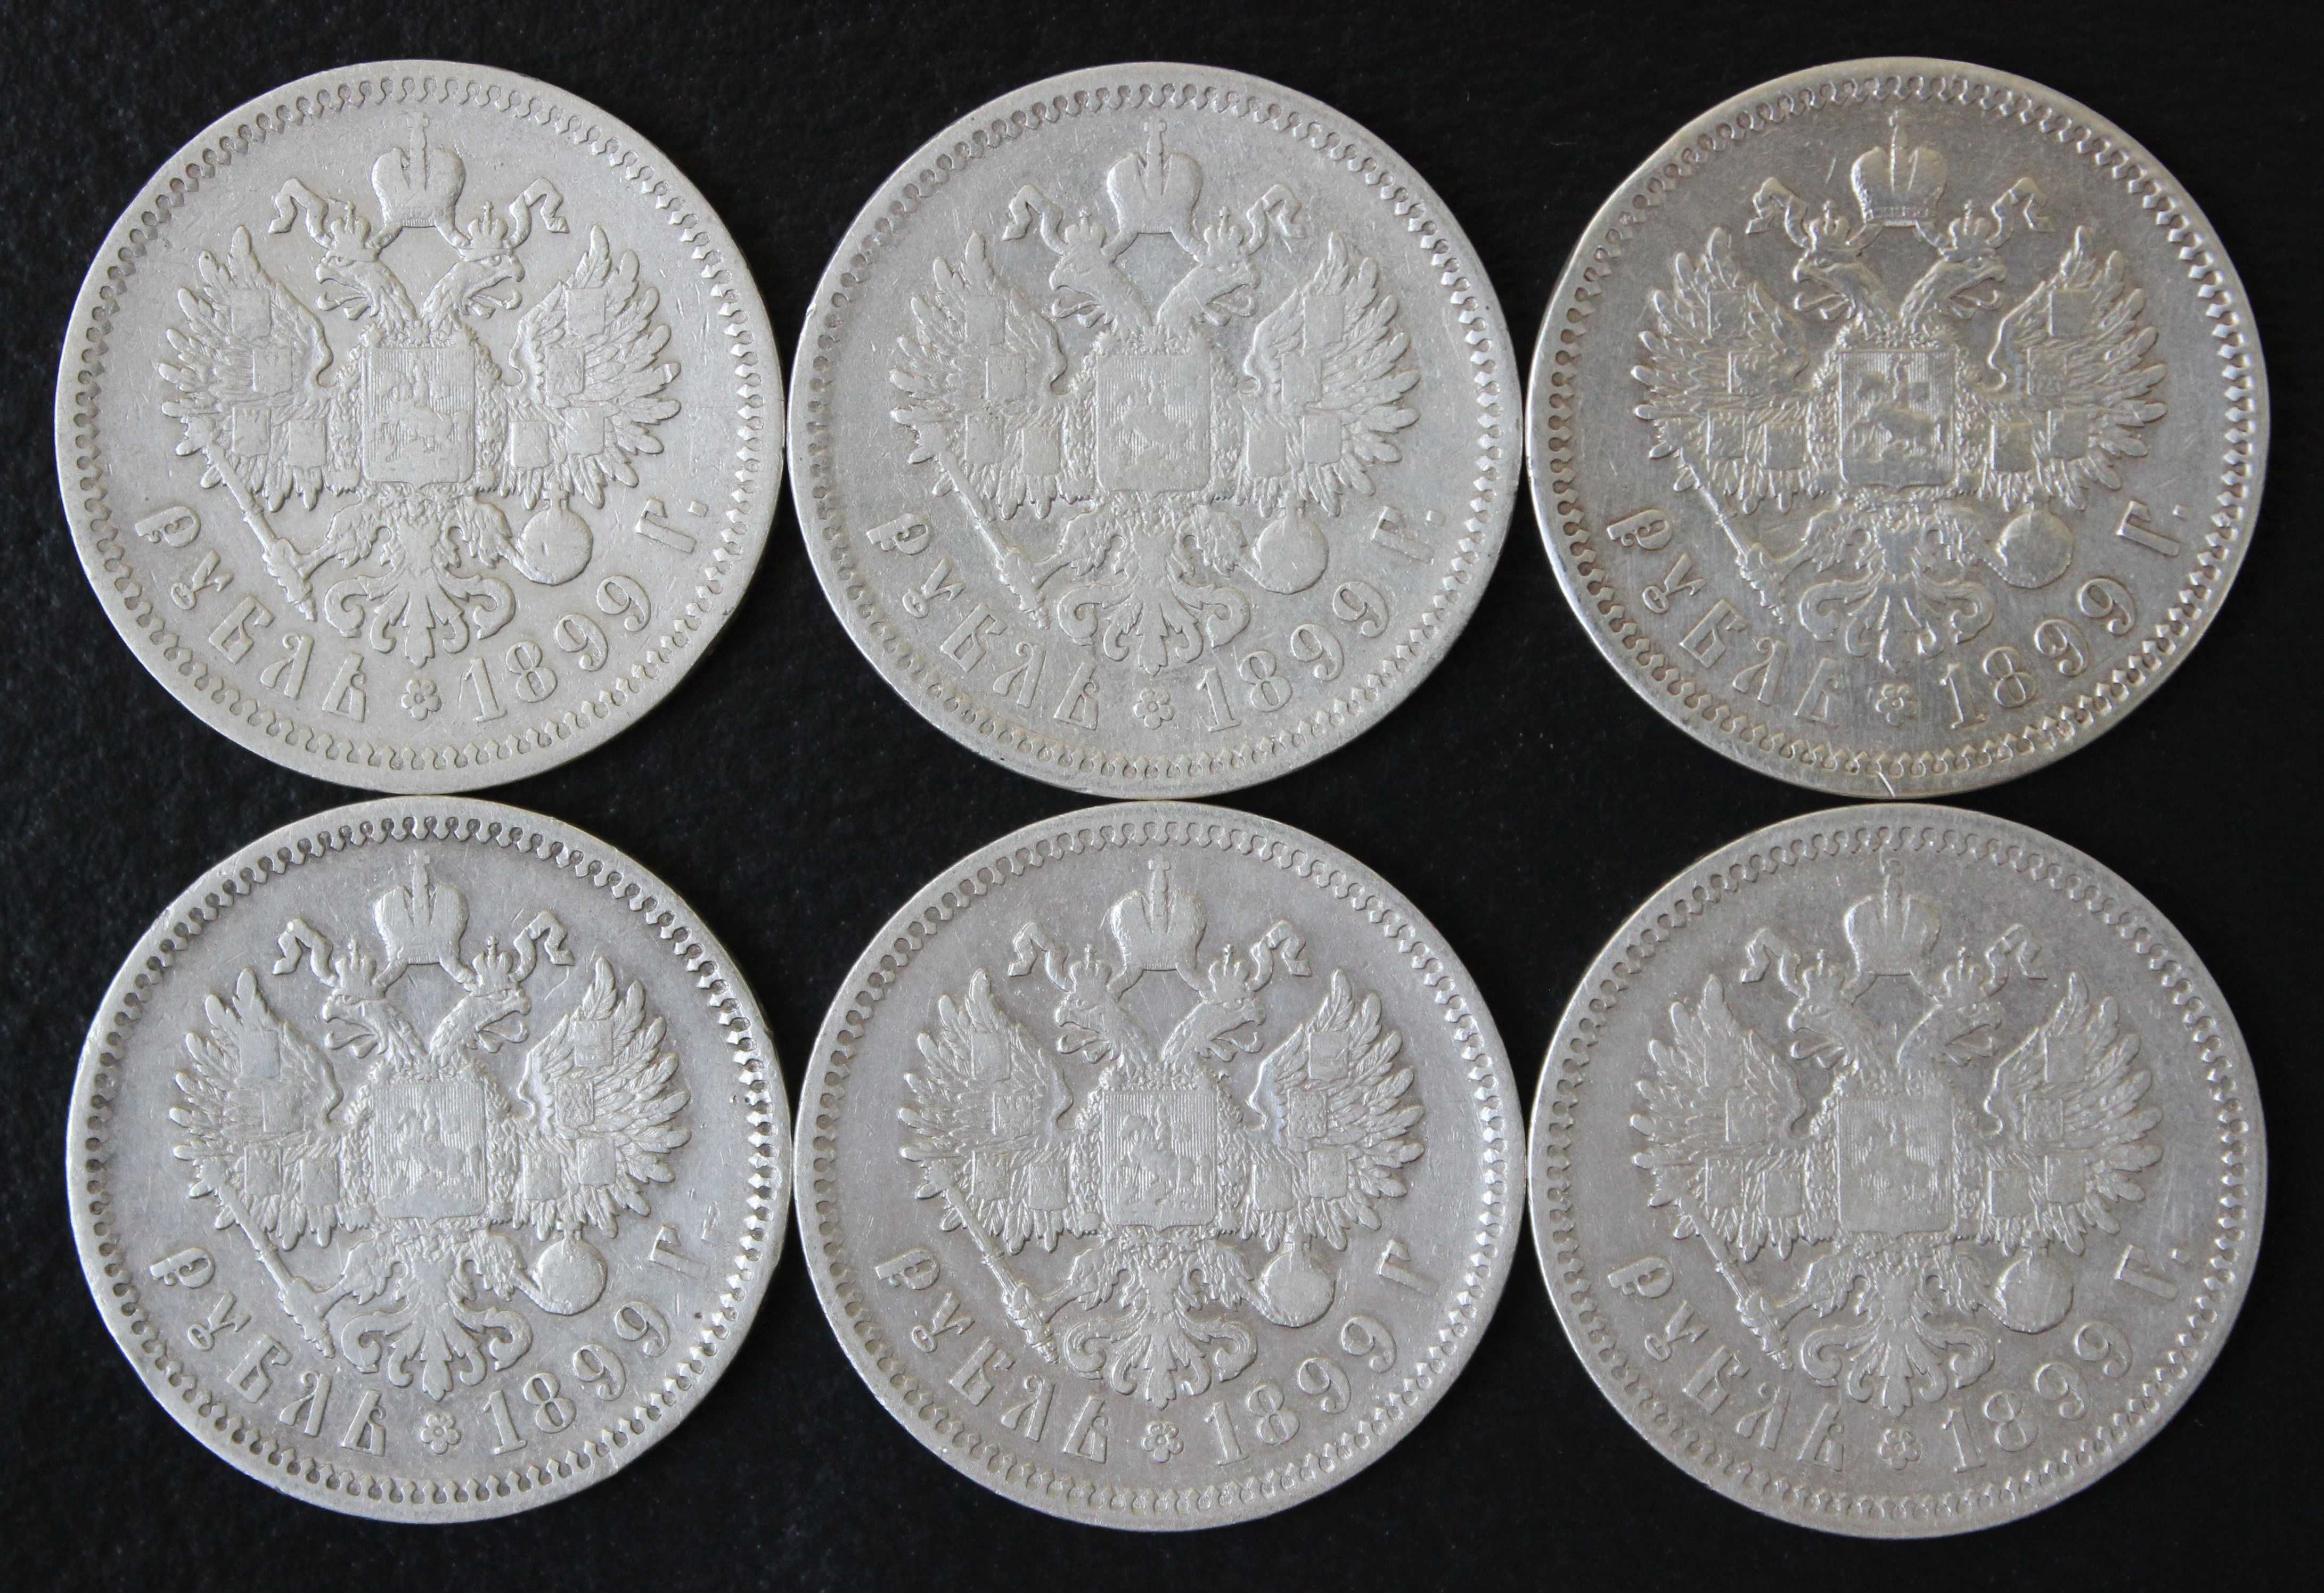 царская монета 1 рубль 1896,1897,1898,1899 года,серебро,оригинал